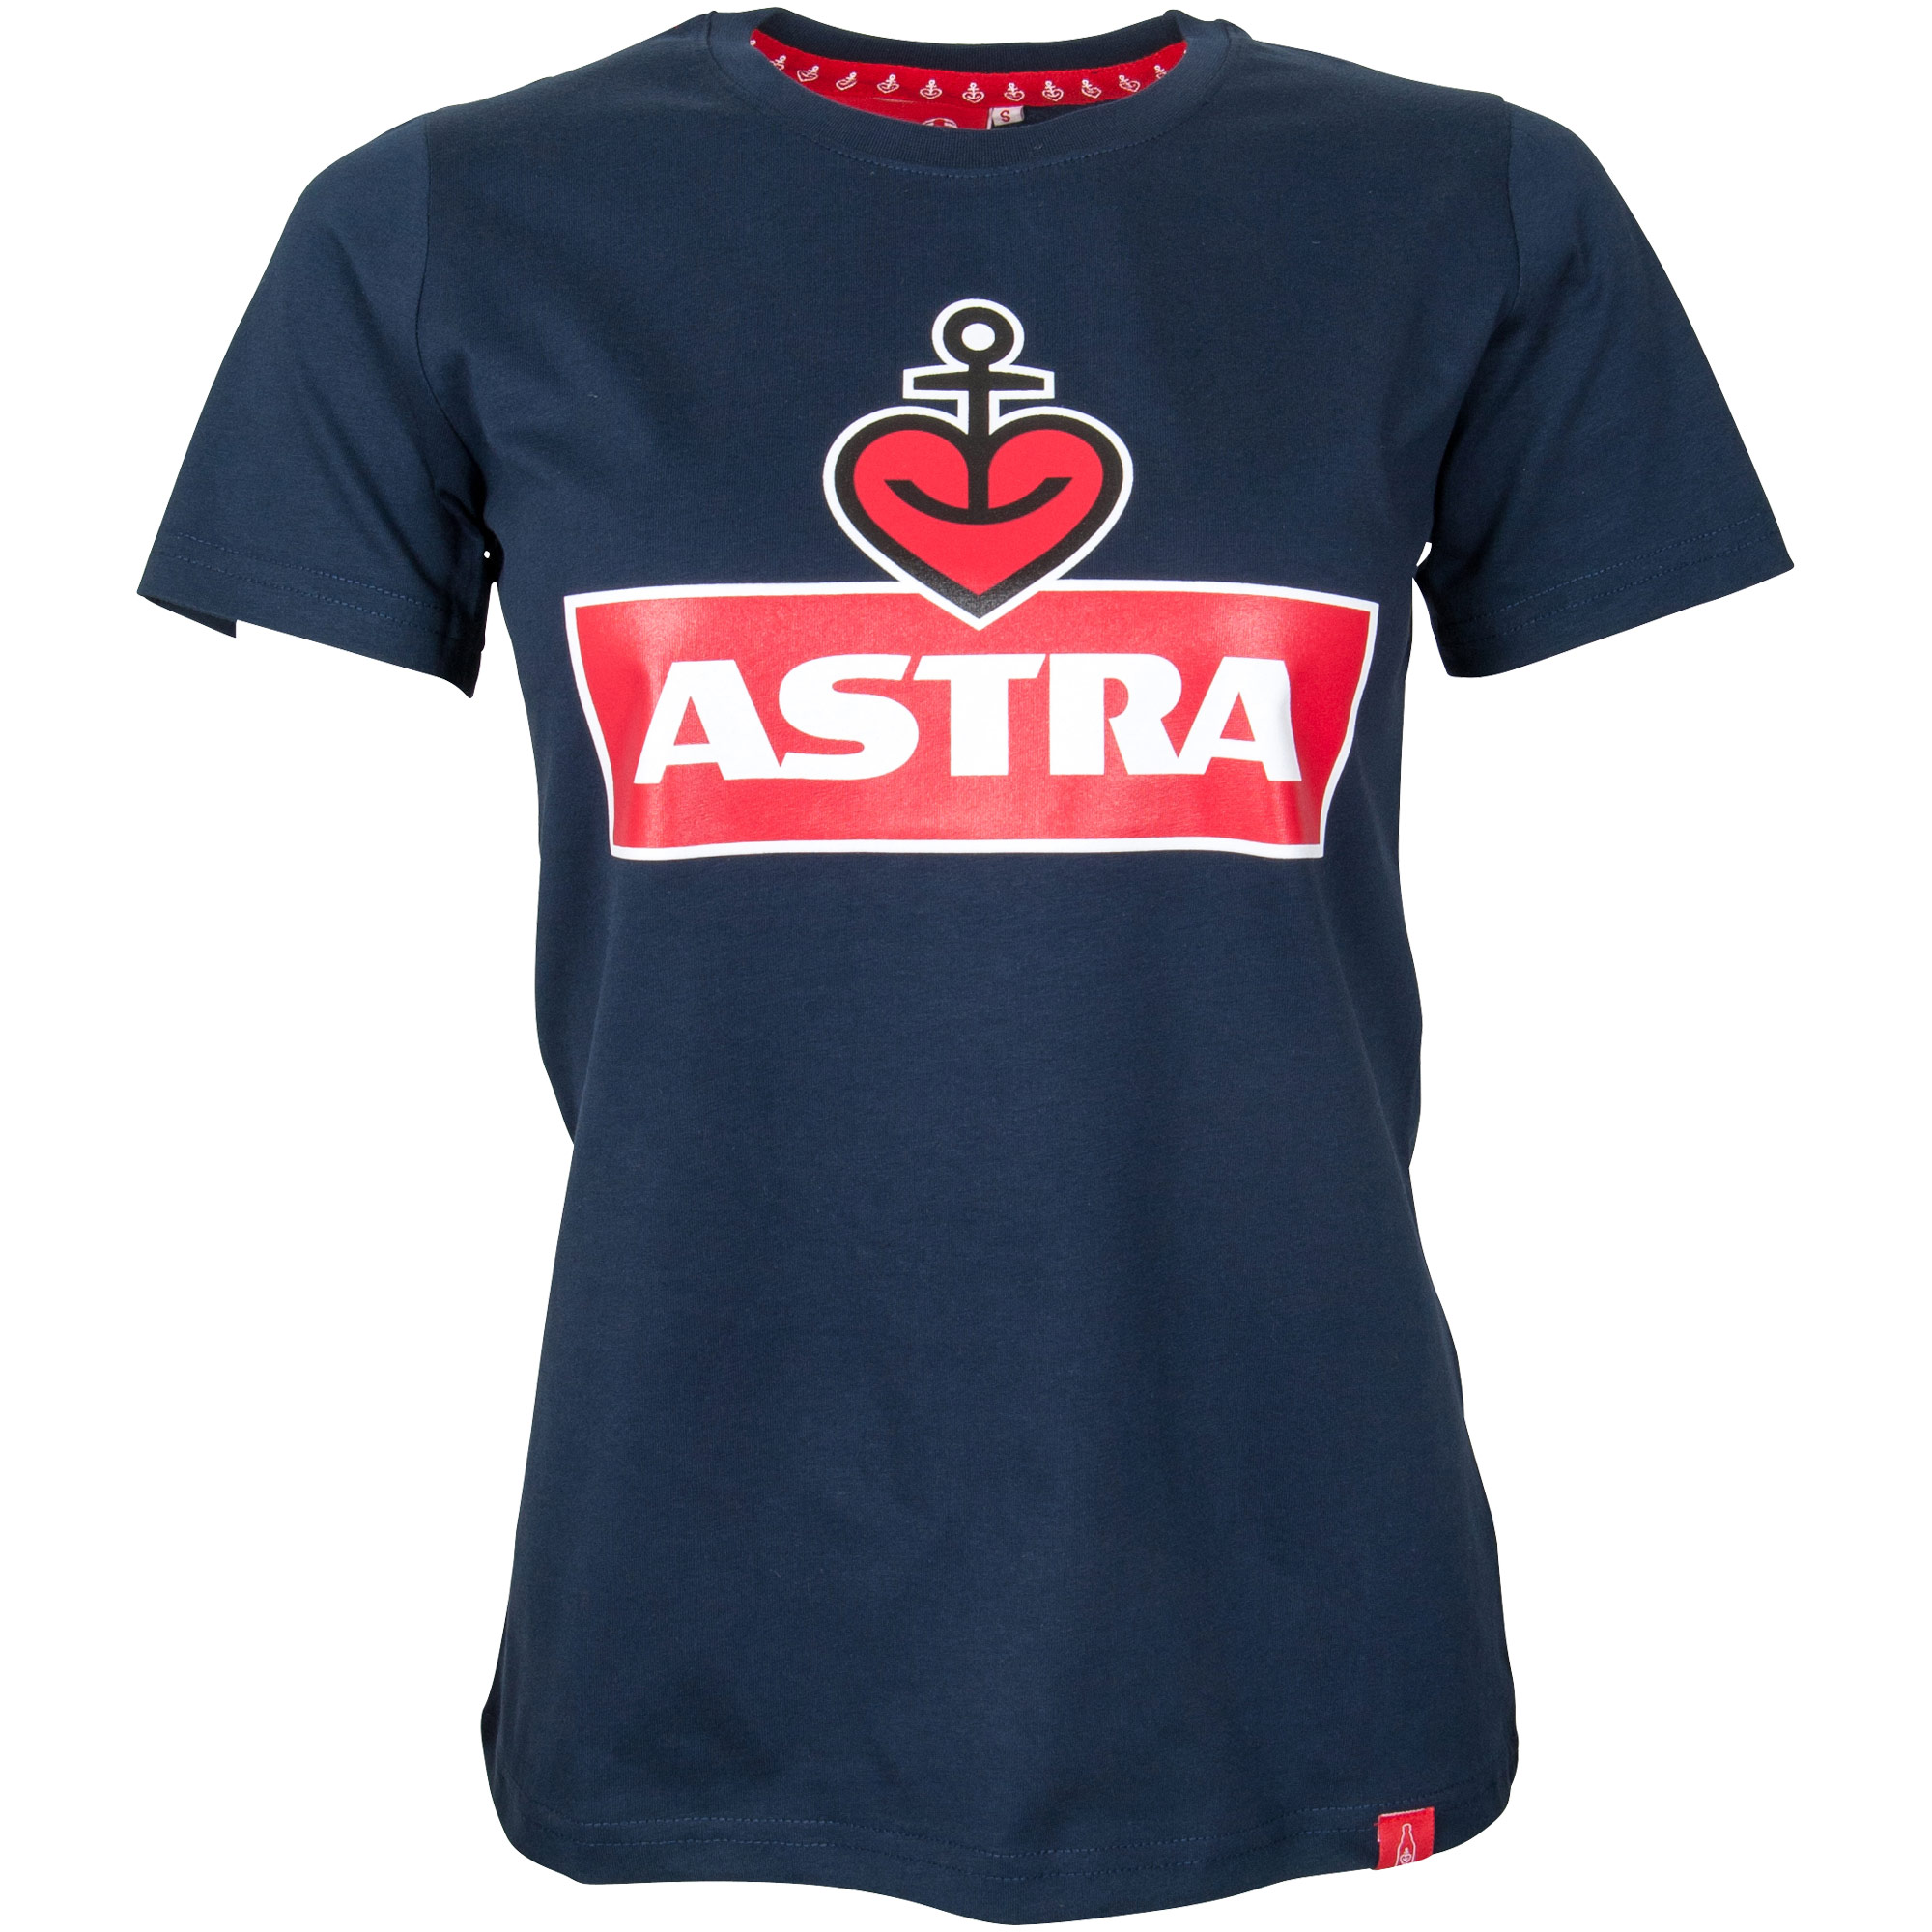 Astra - Damen T-Shirt Logo Navy - blau